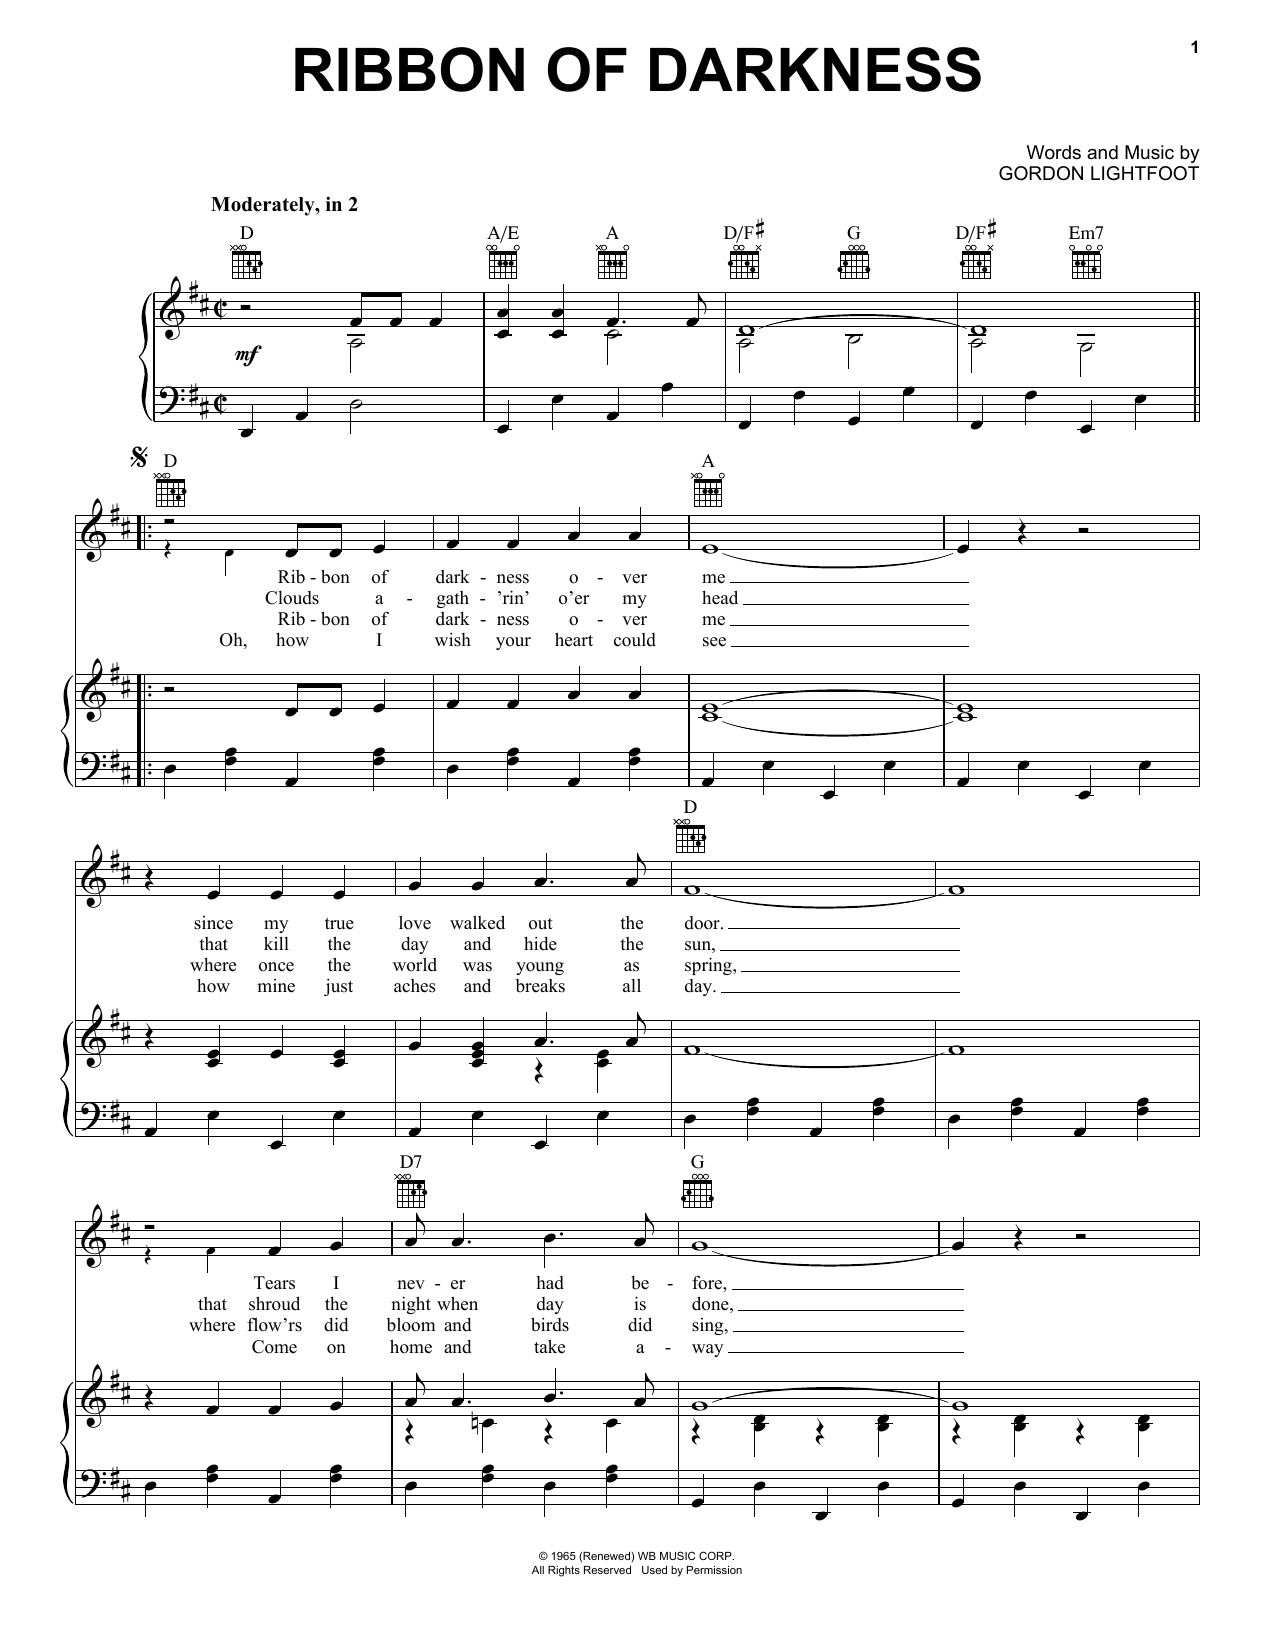 Gordon Lightfoot Ribbon Of Darkness Sheet Music Notes & Chords for Lyrics & Chords - Download or Print PDF